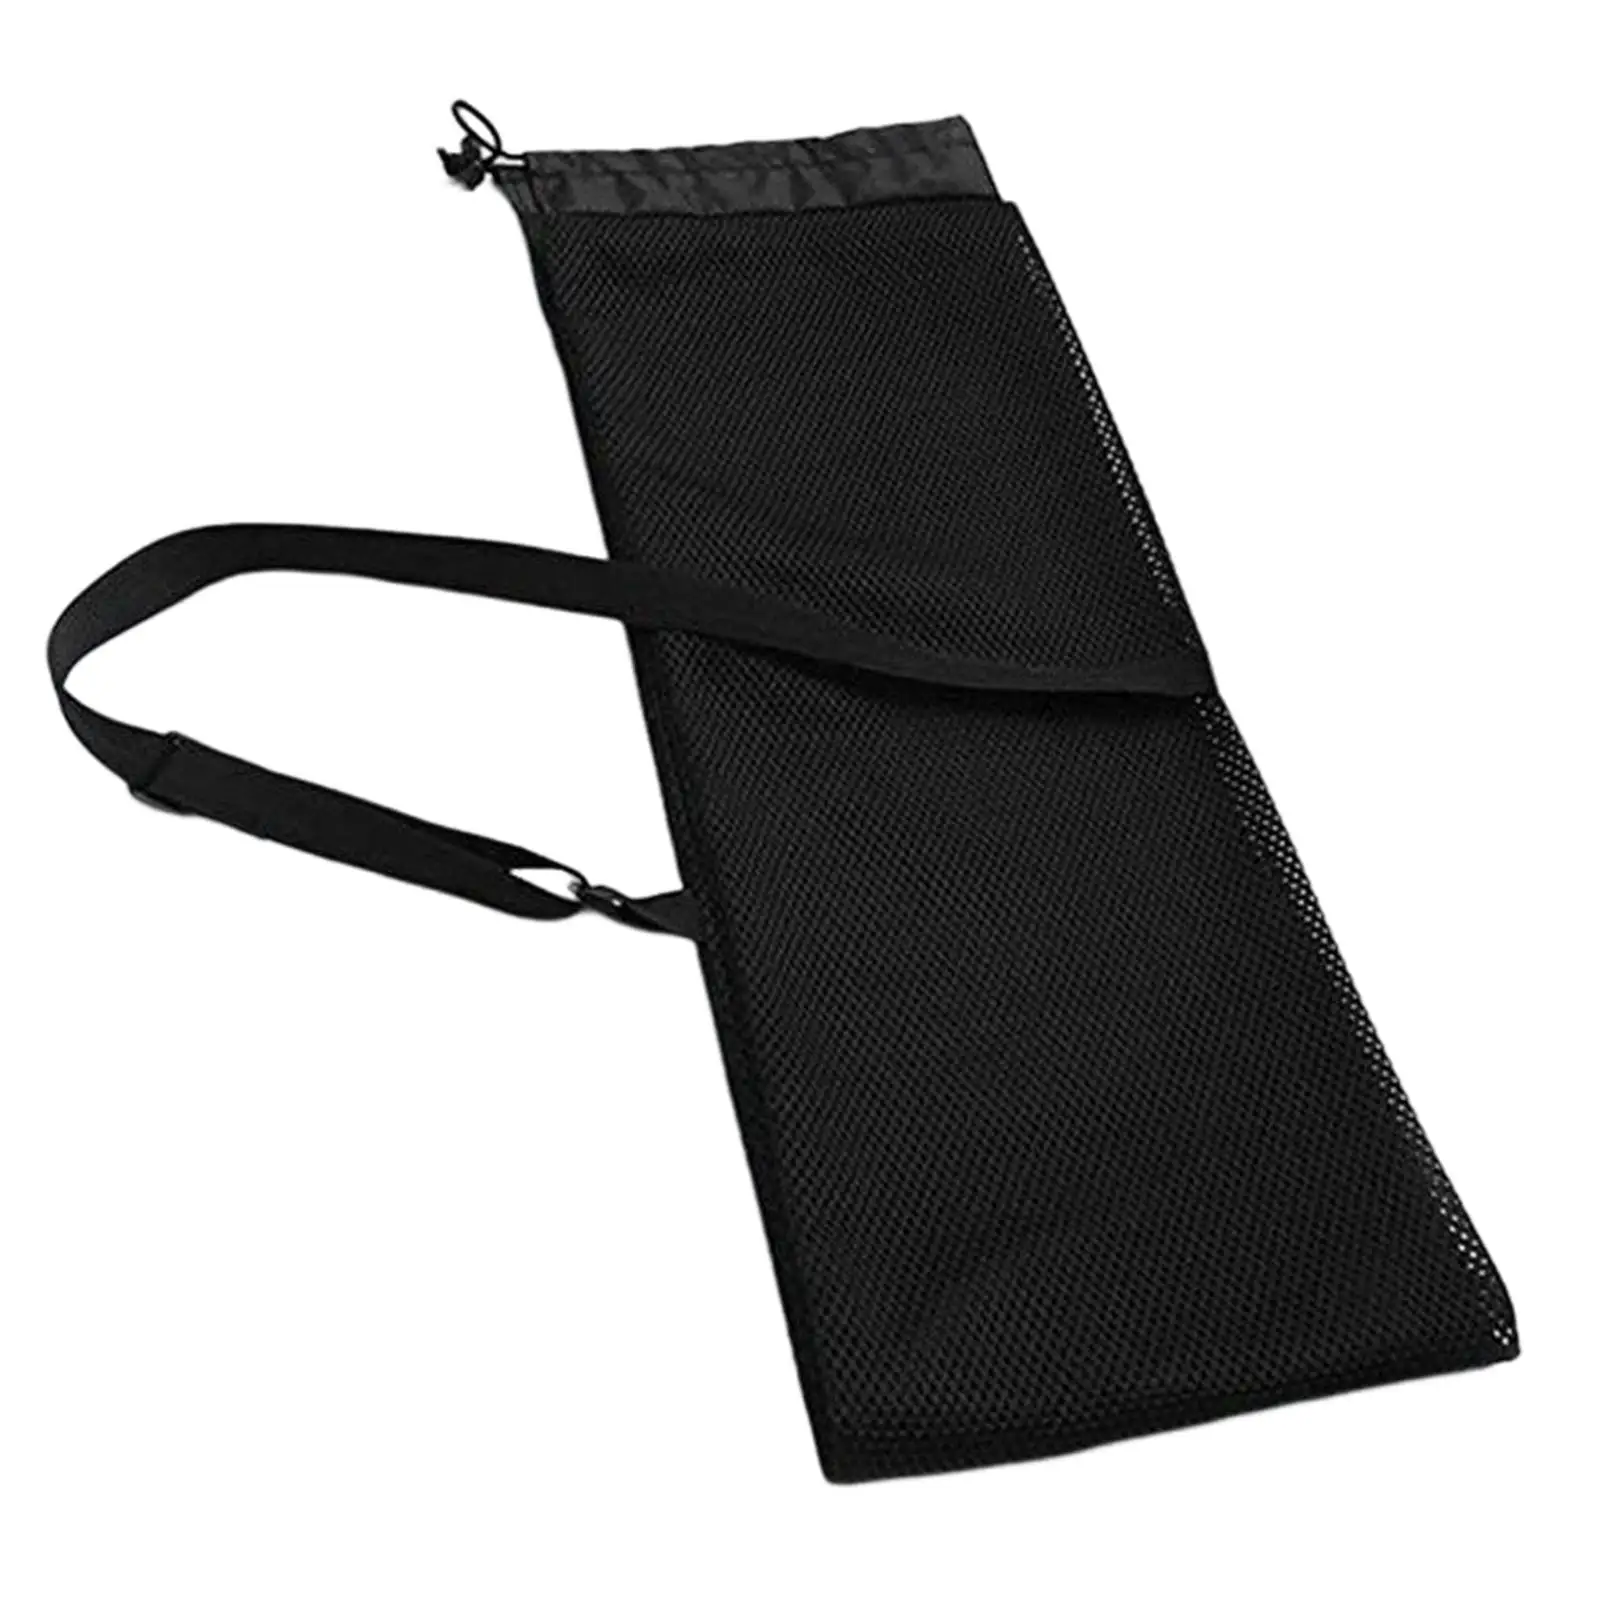 Durable  Storage Bag with Adjustable Strap for Canoe Split Shaft Drawstring Mesh Holder Carrying Bag Protector Cover